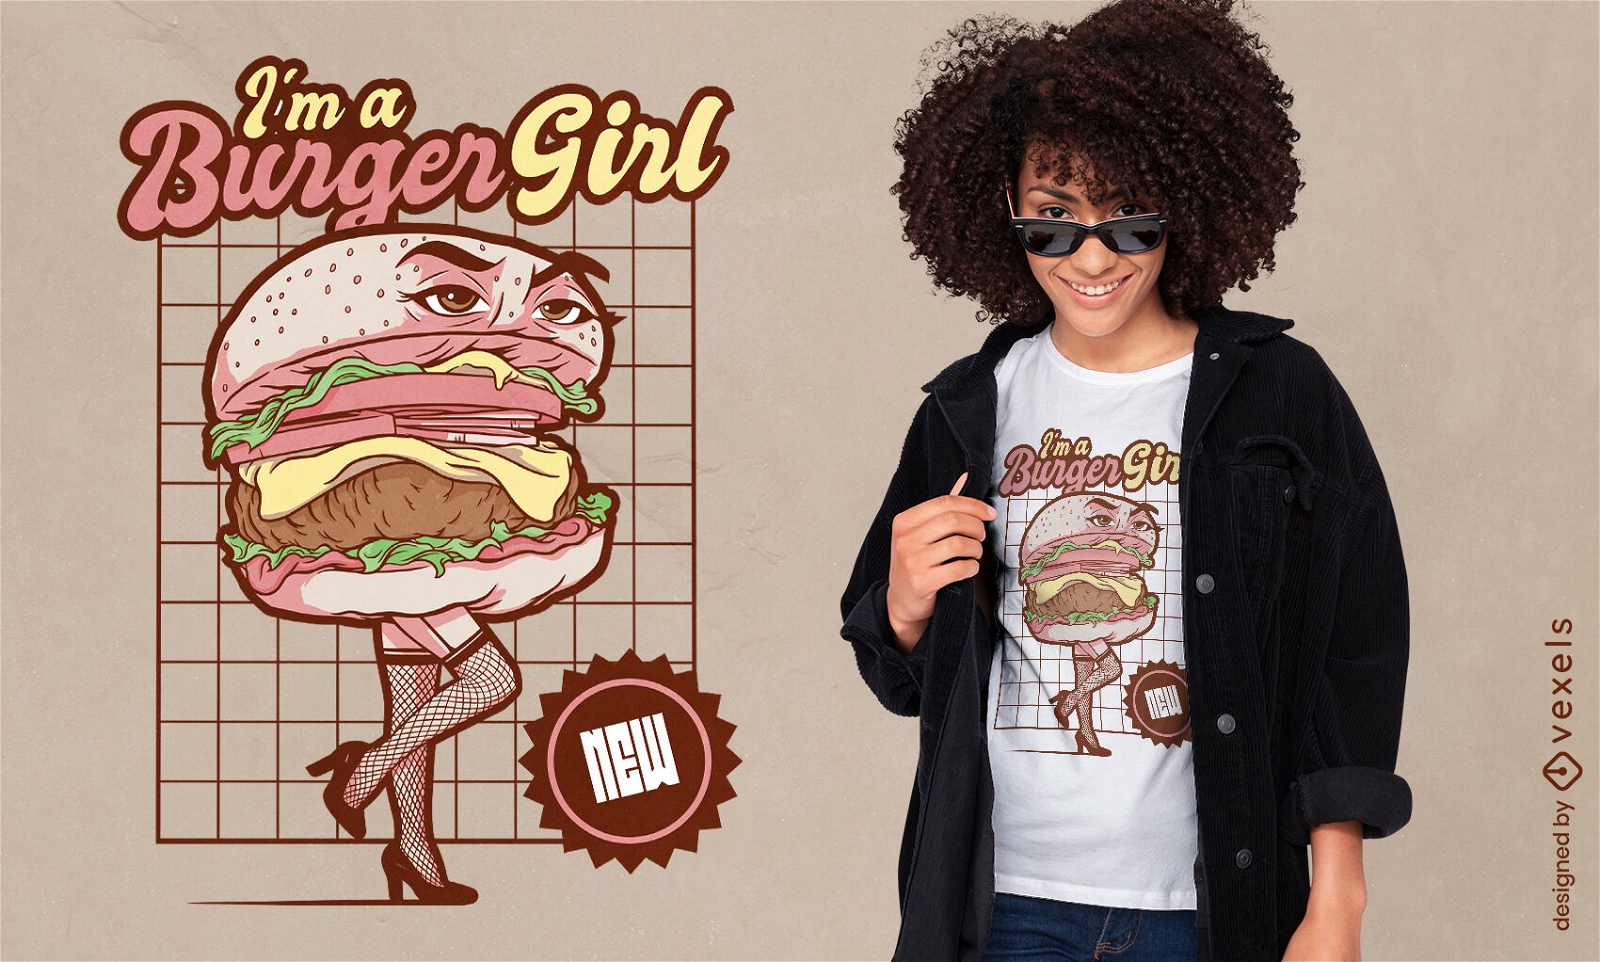 Diseño de camiseta de personaje de chica hamburguesa.